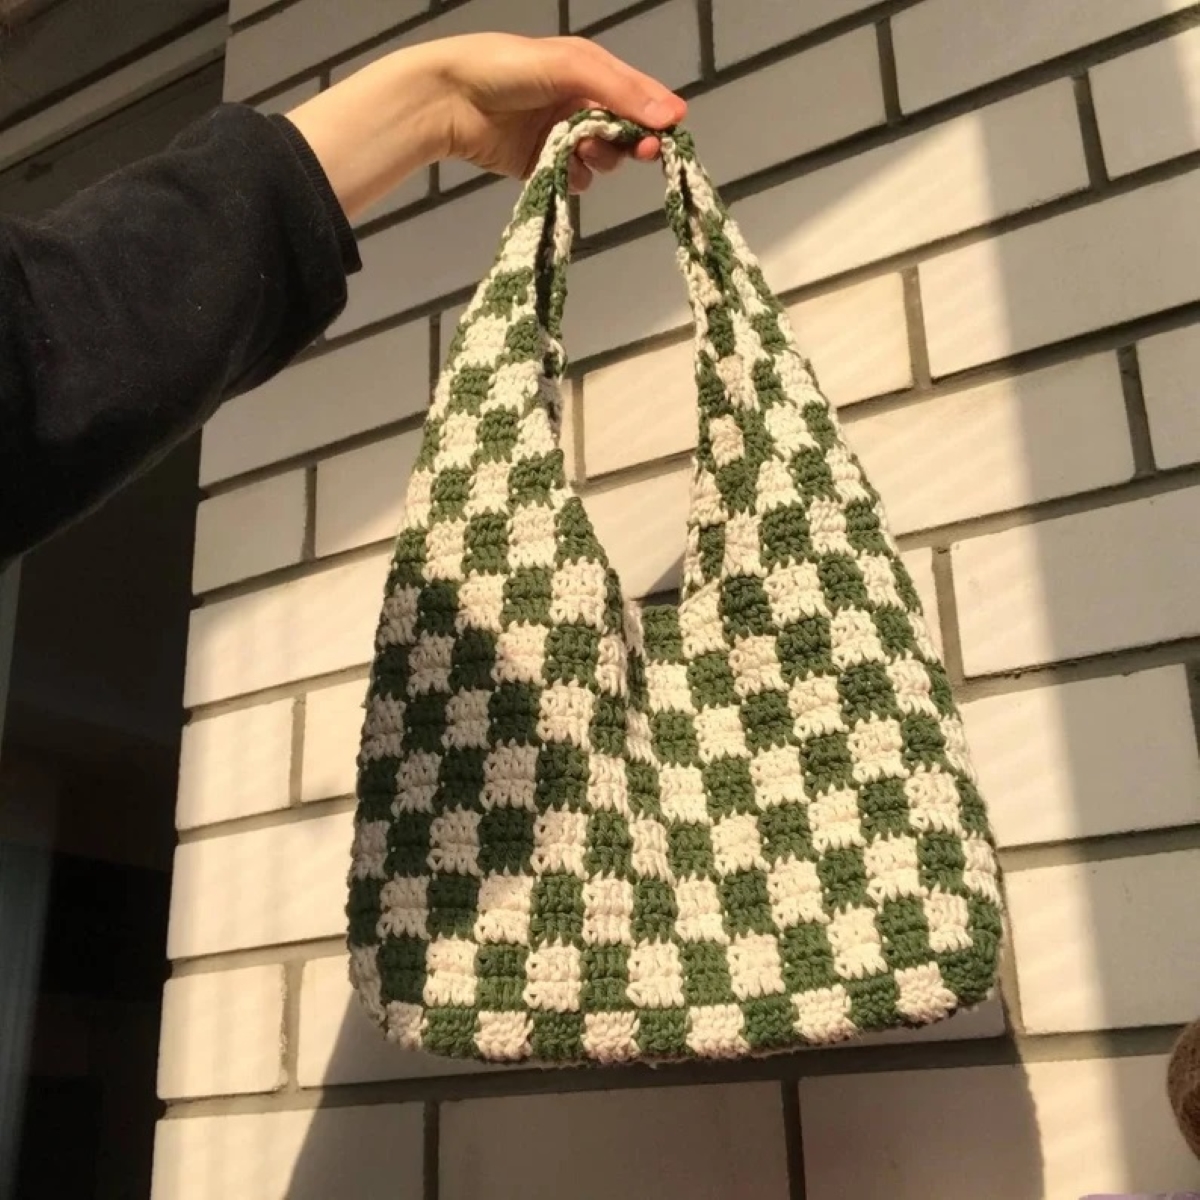 crochet patterns for beginner - checkered crochet bags